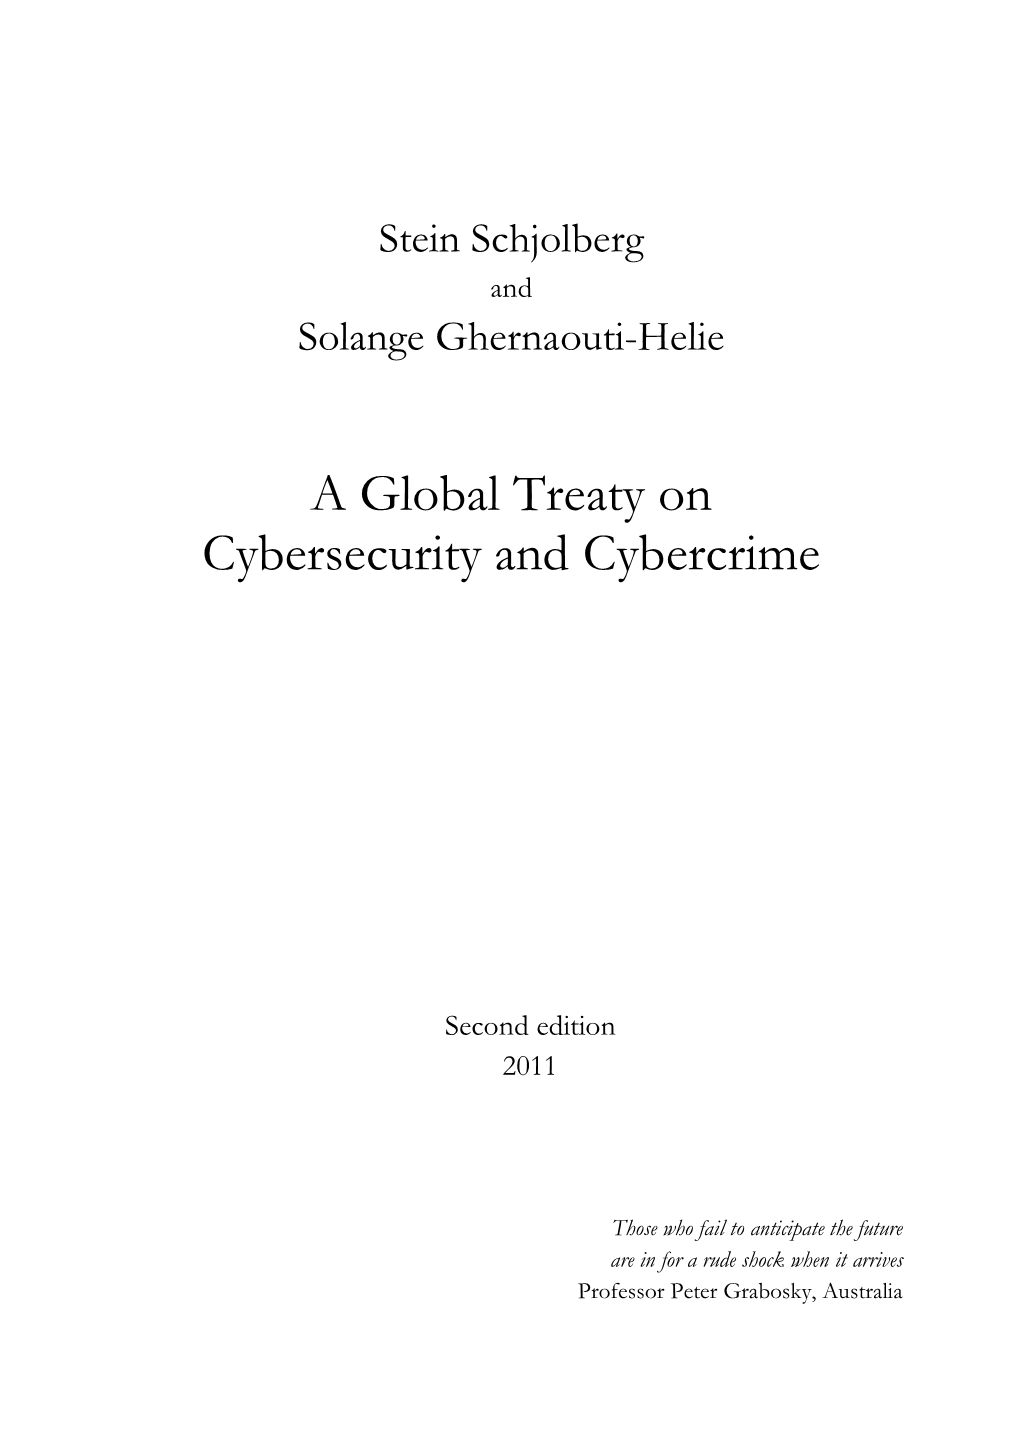 A Global Treaty on Cybersecurity and Cybercrime